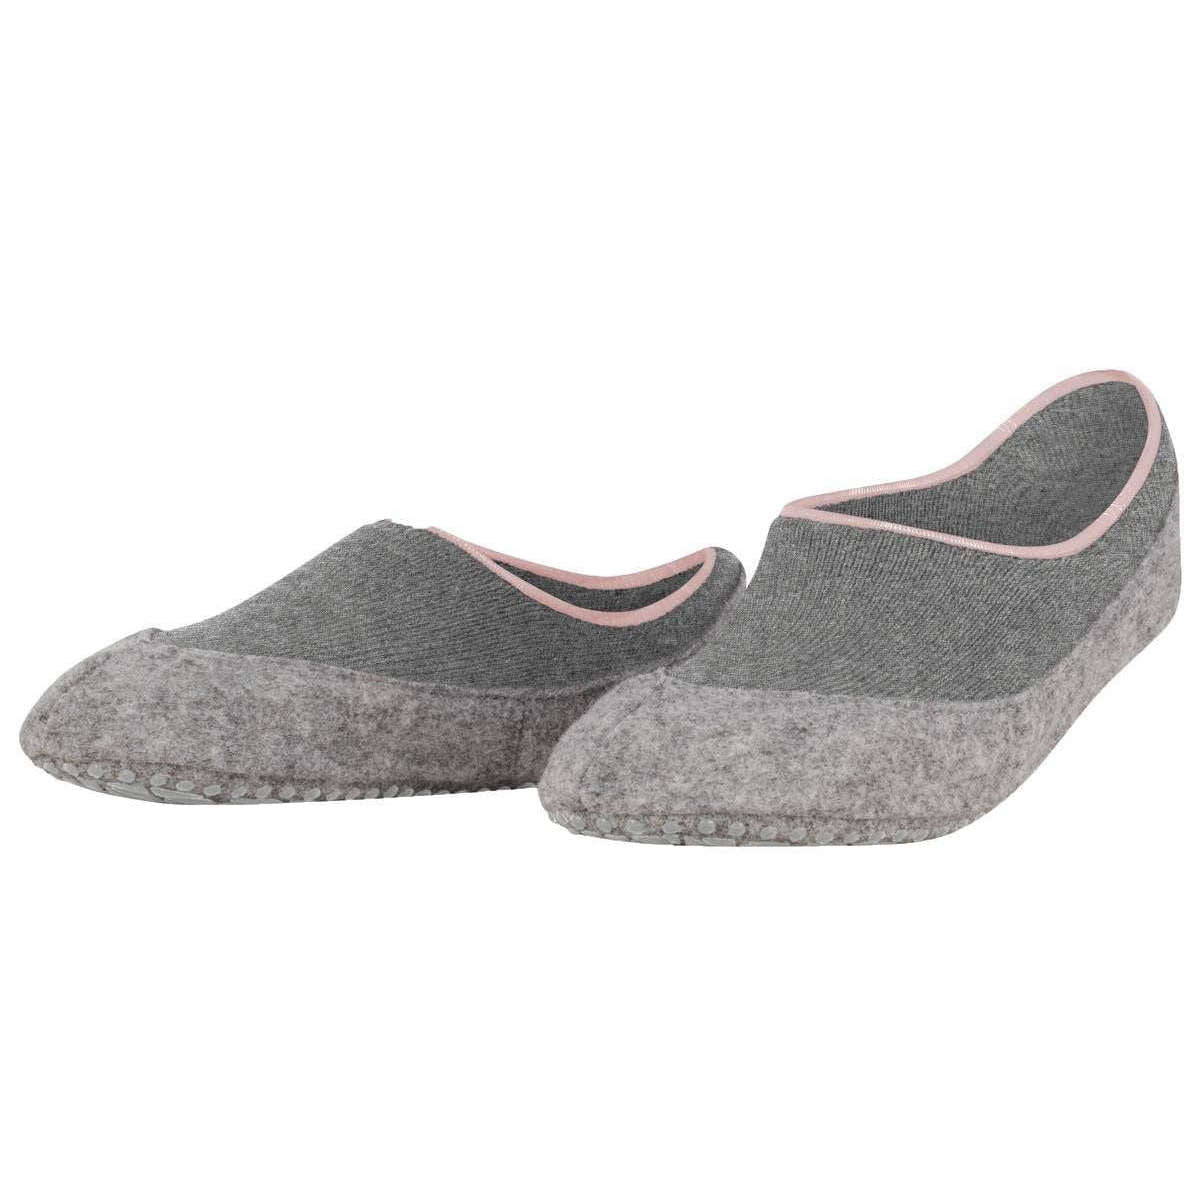 Falke Cosyshoe Invisible Slipper Socks - Light Grey